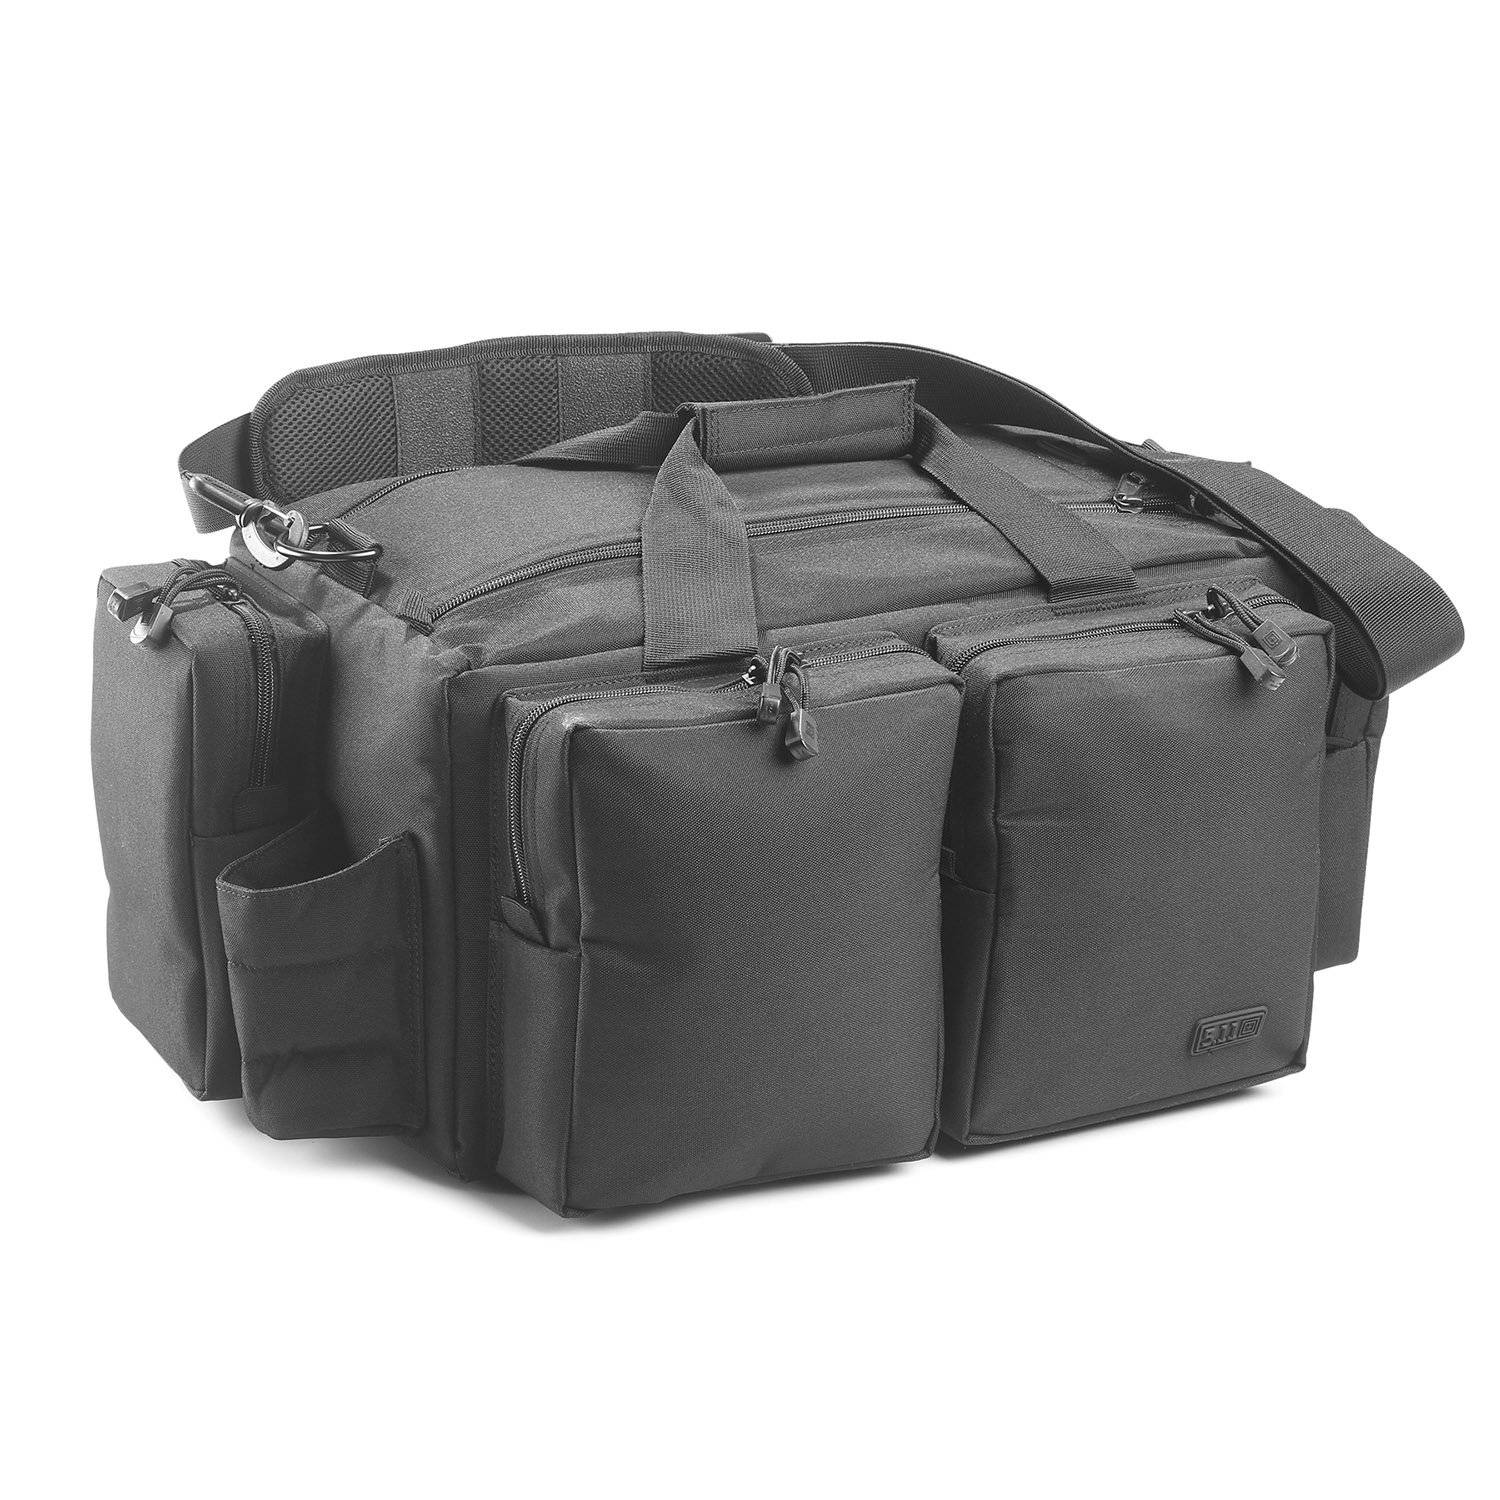 Pistol & Magazine Tactical Pack  PFB1336 BLACK Tactical Range Ready Bag 